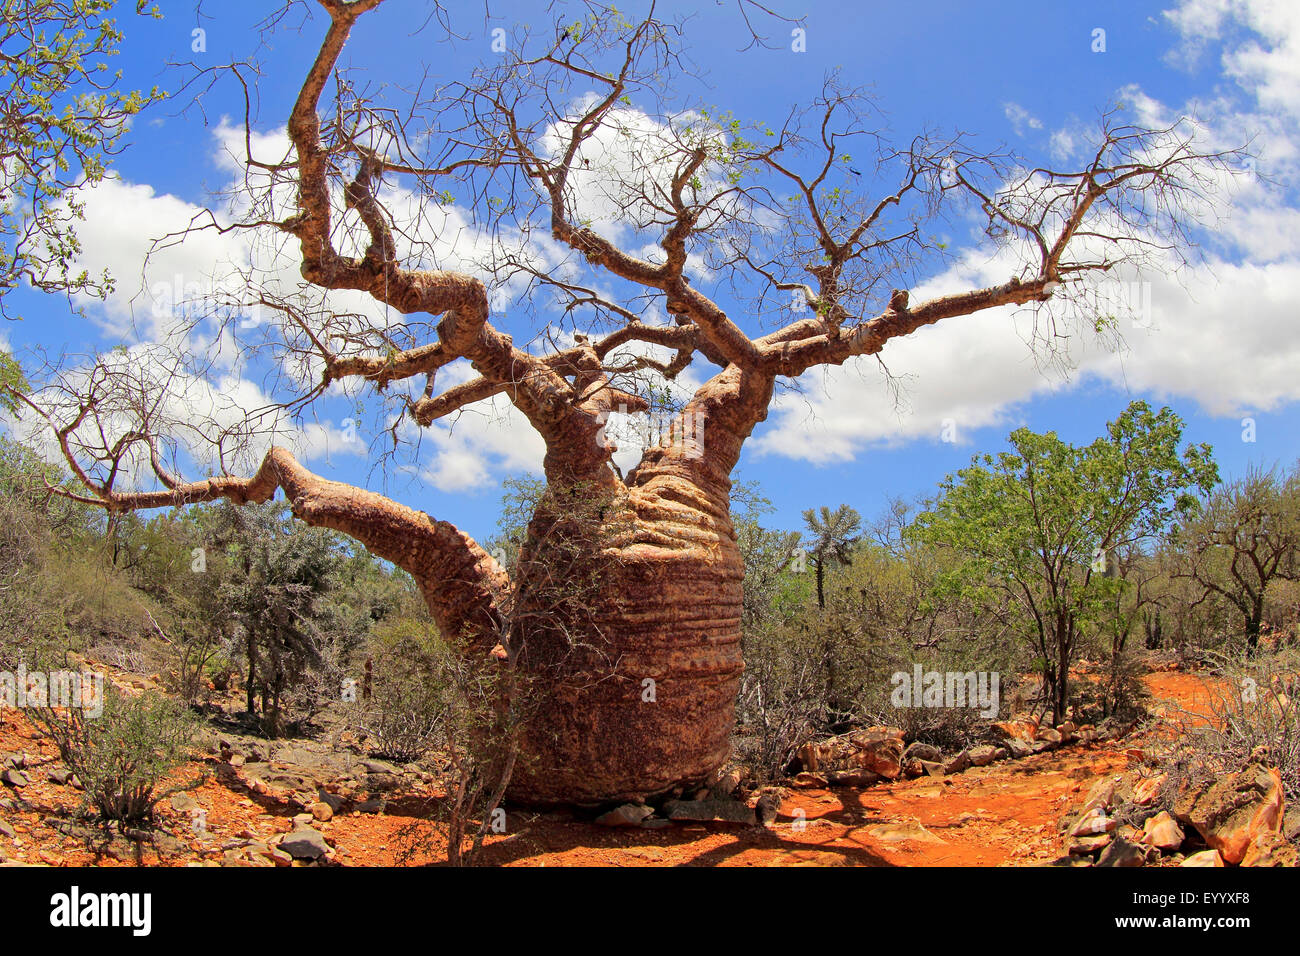 Bottle Baobab Tree Photography and Images Alamy